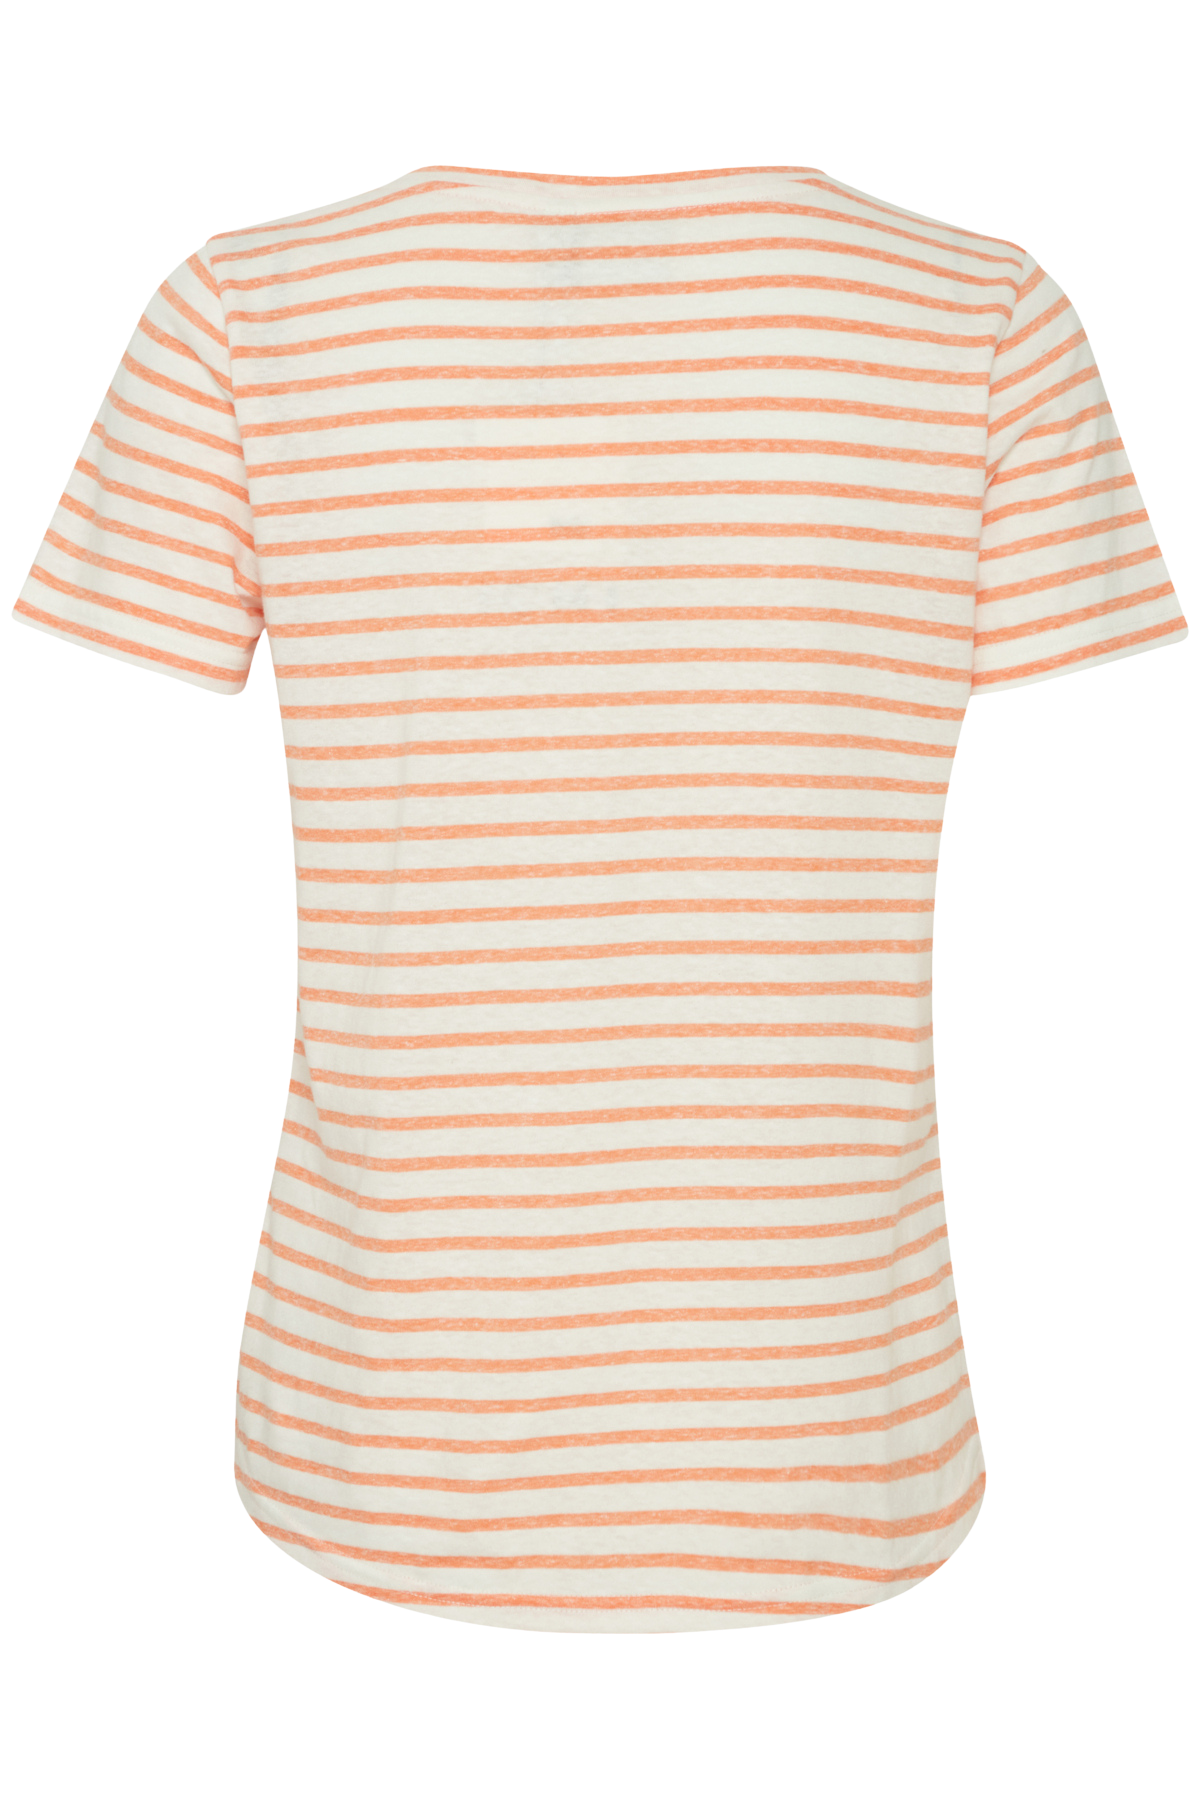 ICHI Yulieta Coral Rose Stripes T-Shirt